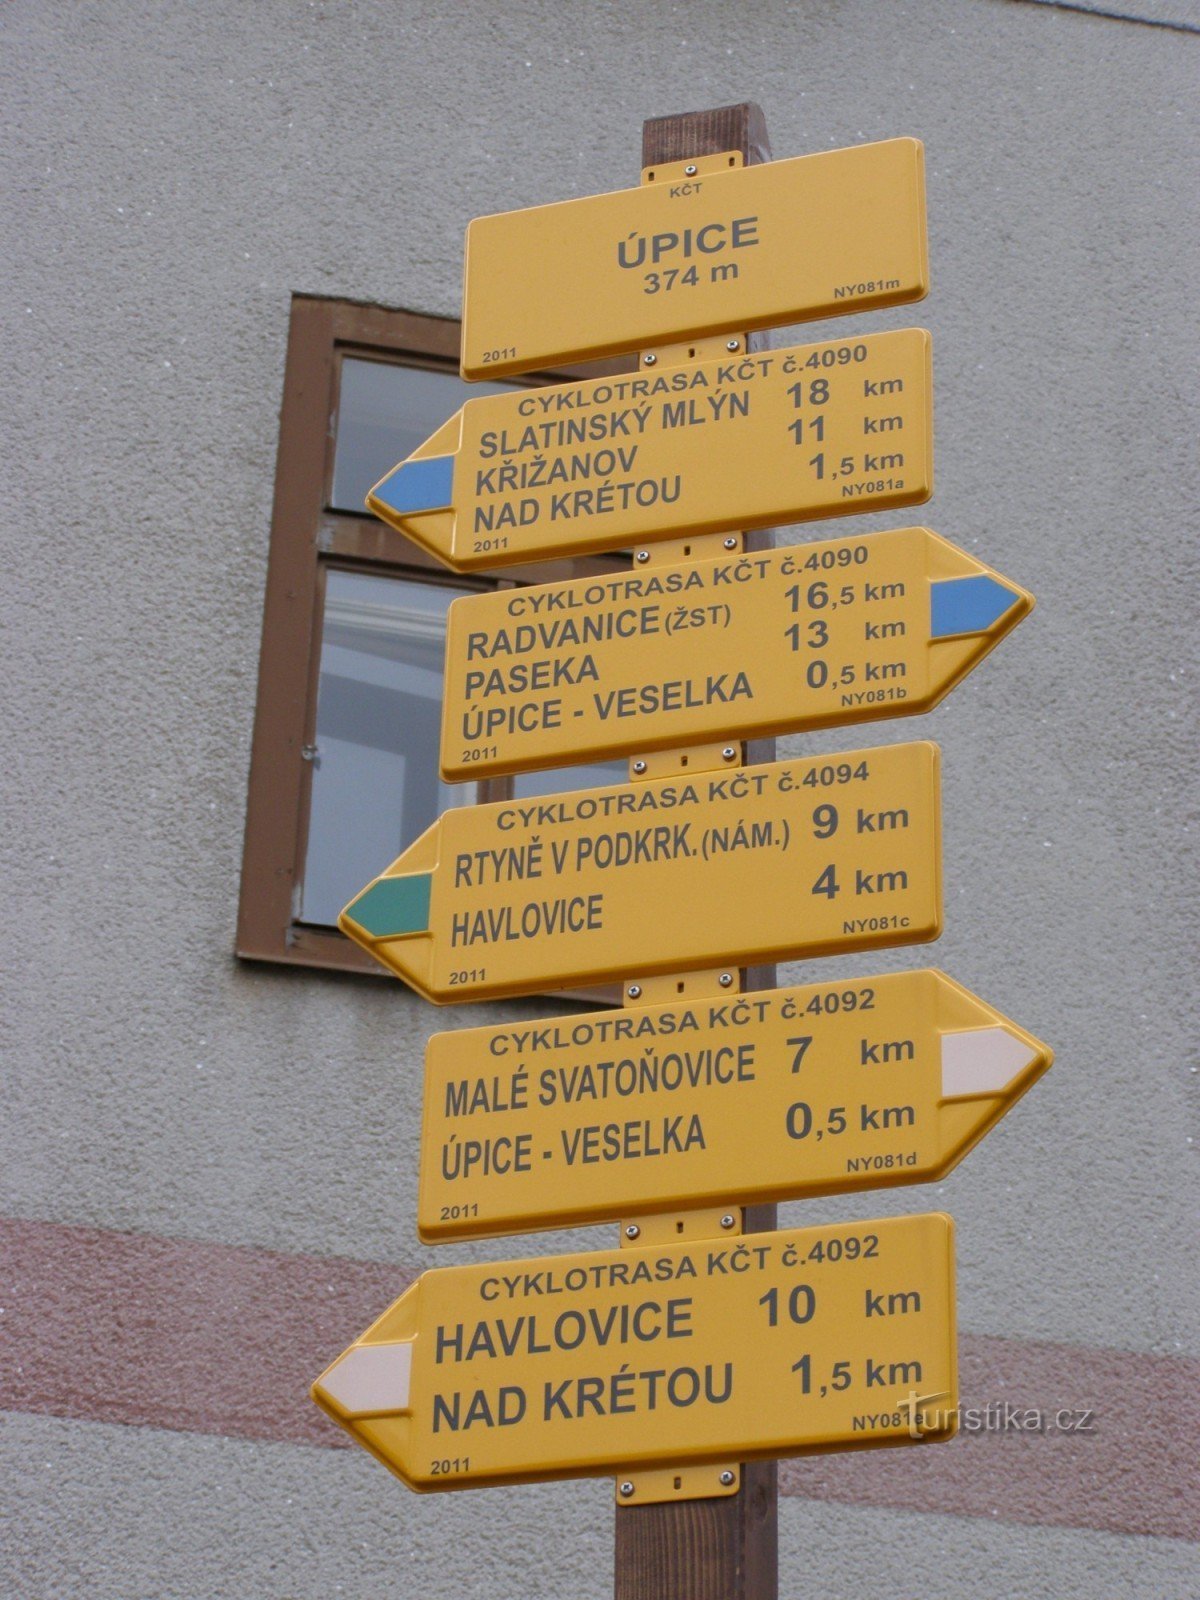 Radtourismusknotenpunkt Úpice - TG Masaryk-Platz